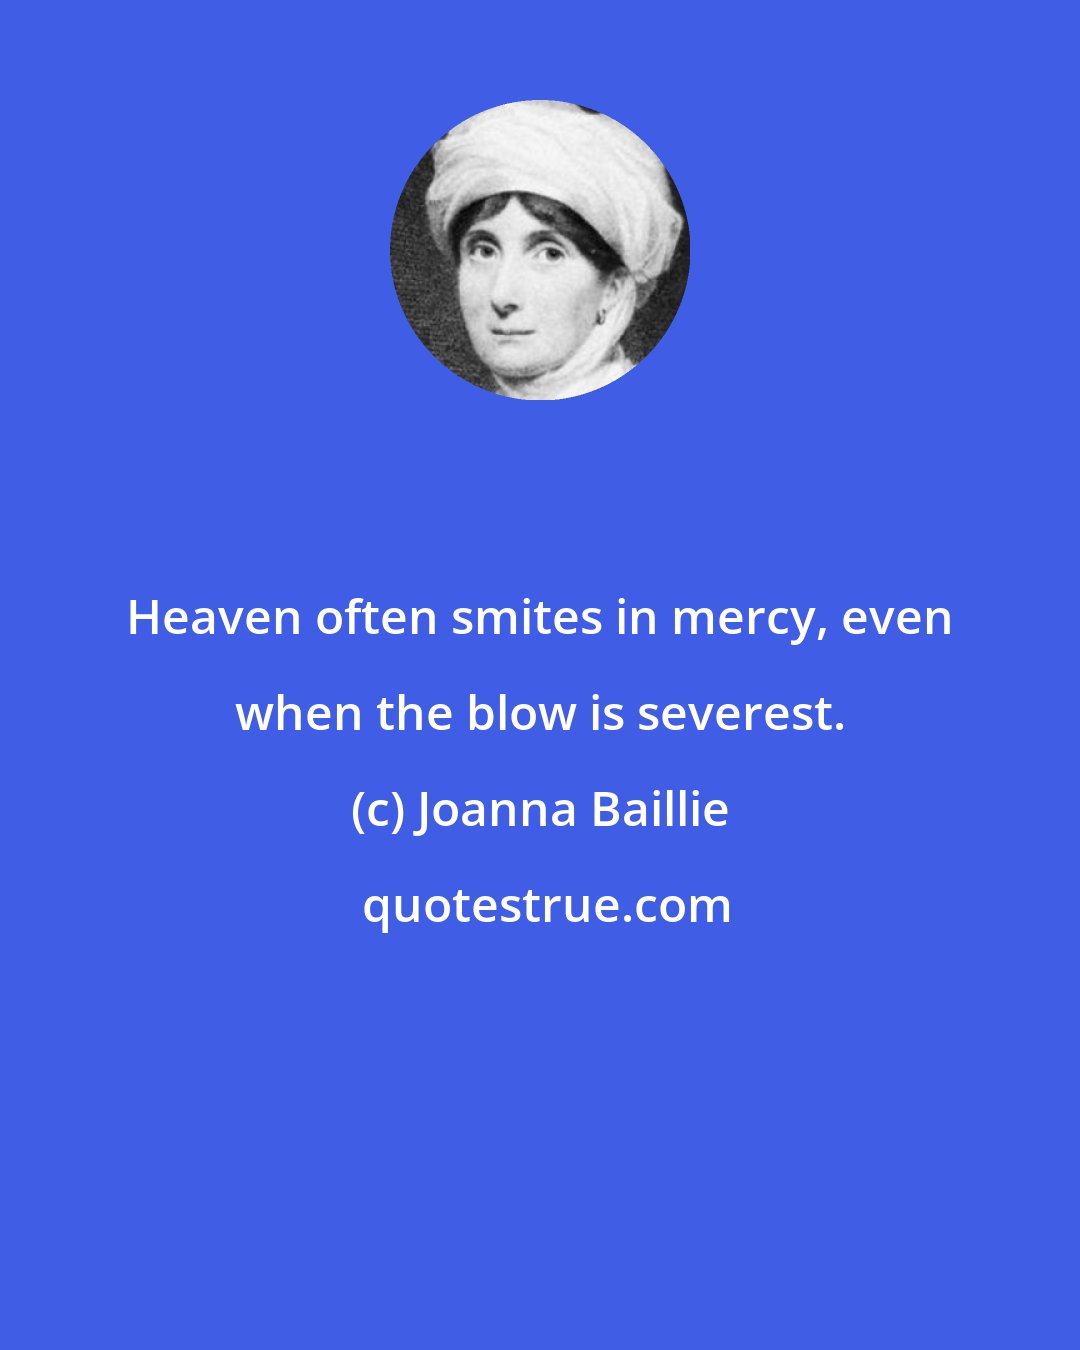 Joanna Baillie: Heaven often smites in mercy, even when the blow is severest.